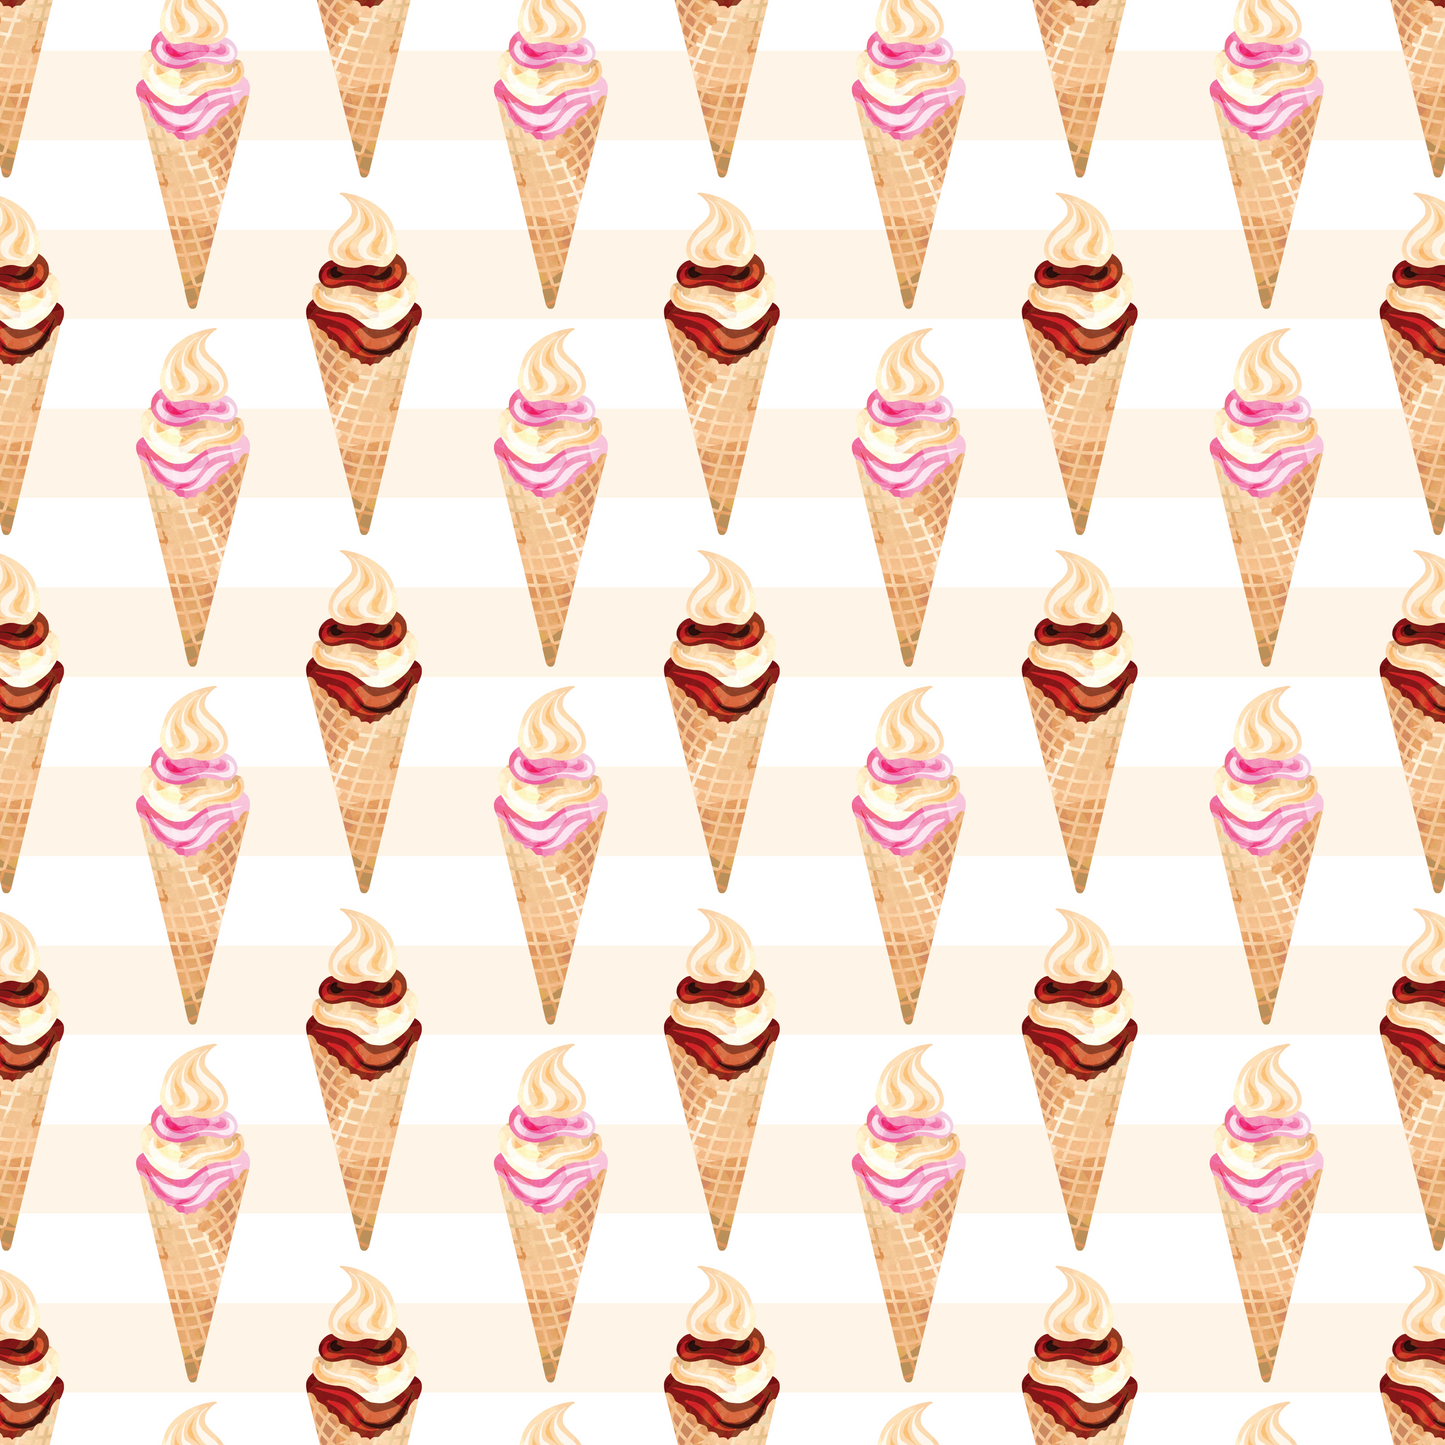 Ice Cream - Strawberry and Chocolate Waffle Cones 007